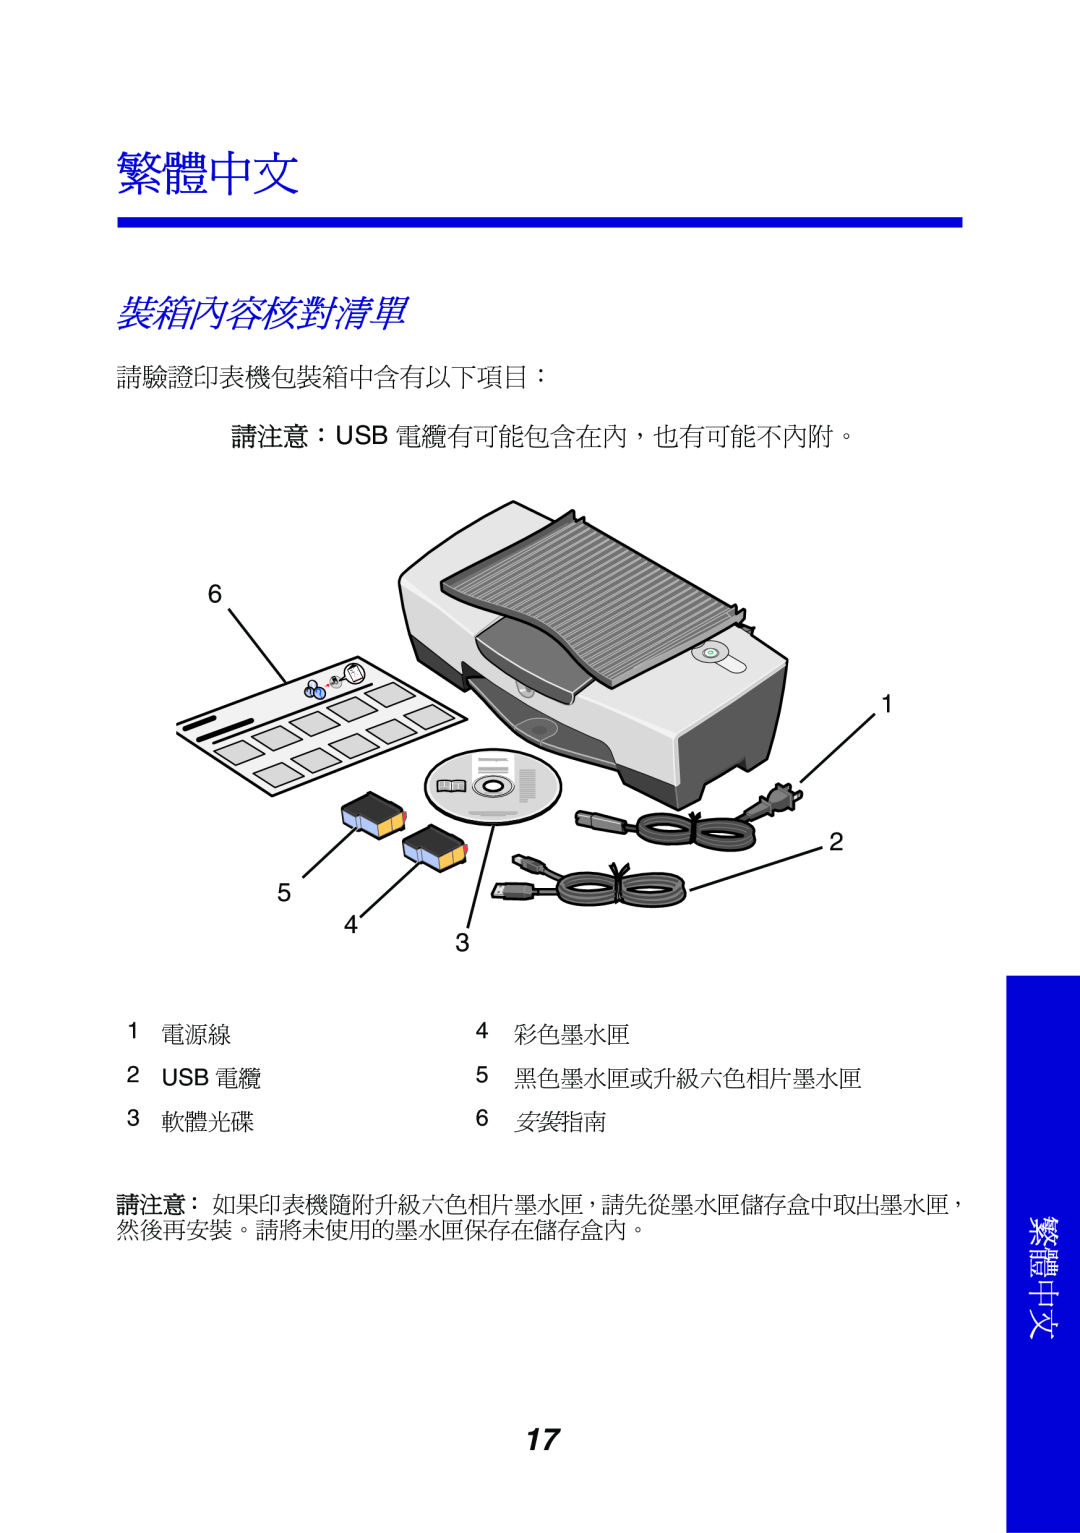 Lexmark 810 Series manual 裝箱內容核對清單, 體中 文, 繁體中文, 安裝指南 